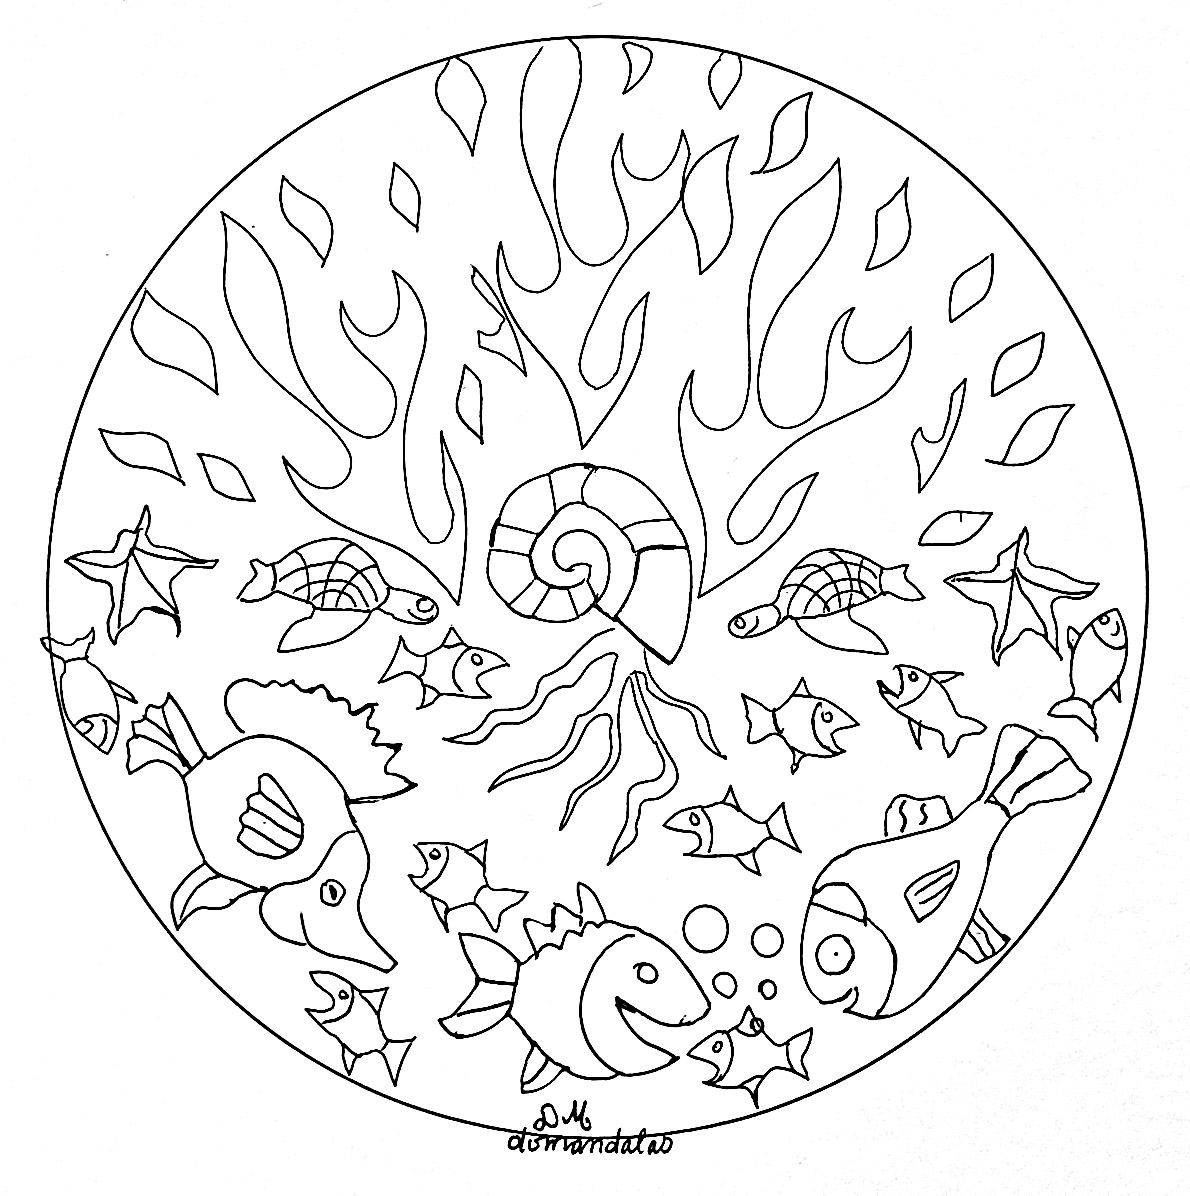 Mandala Domandalas Seabed Mandalas Coloring Pages For Kids To Print Color